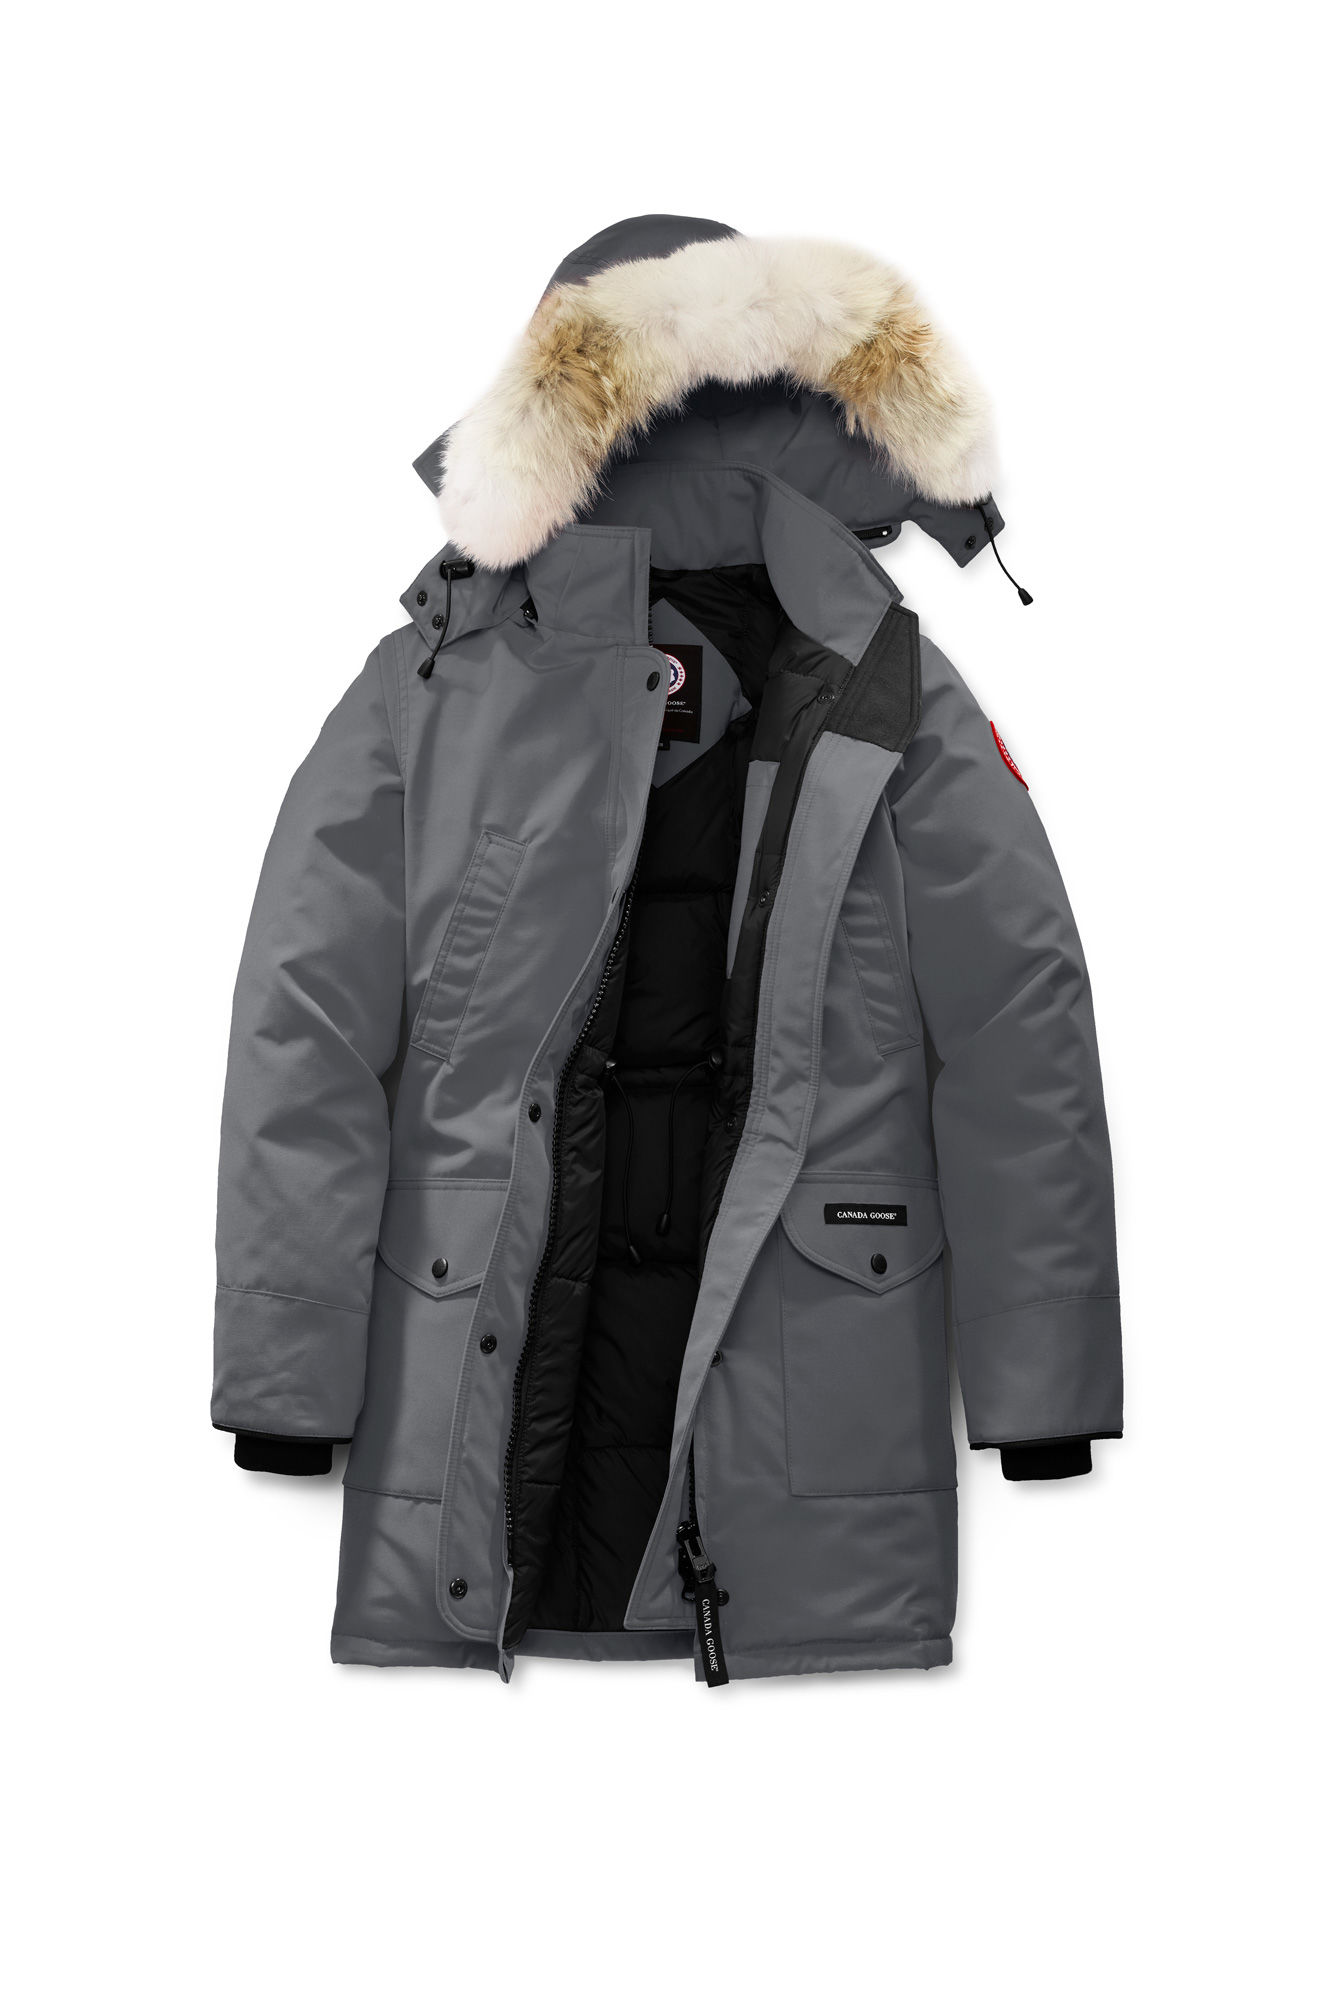 canada goose 6550l r jacket